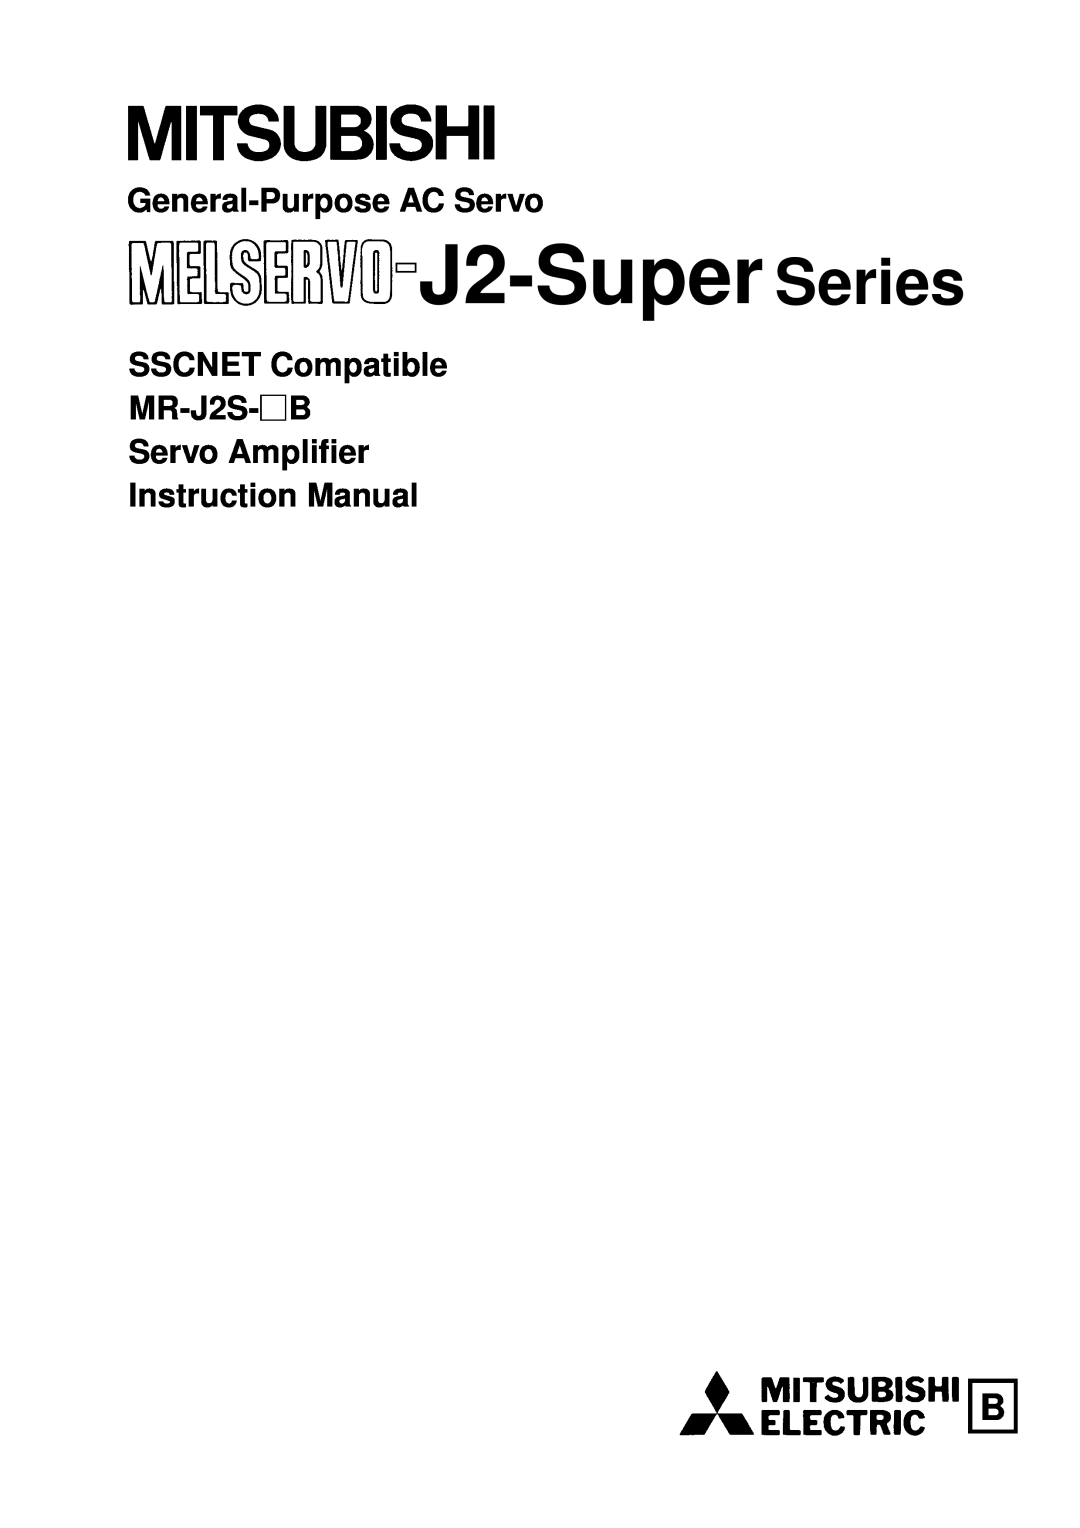 Bose MR-J2S- B instruction manual J2-Super Series, General-PurposeAC Servo, SSCNET Compatible MR-J2S-B Servo Amplifier 